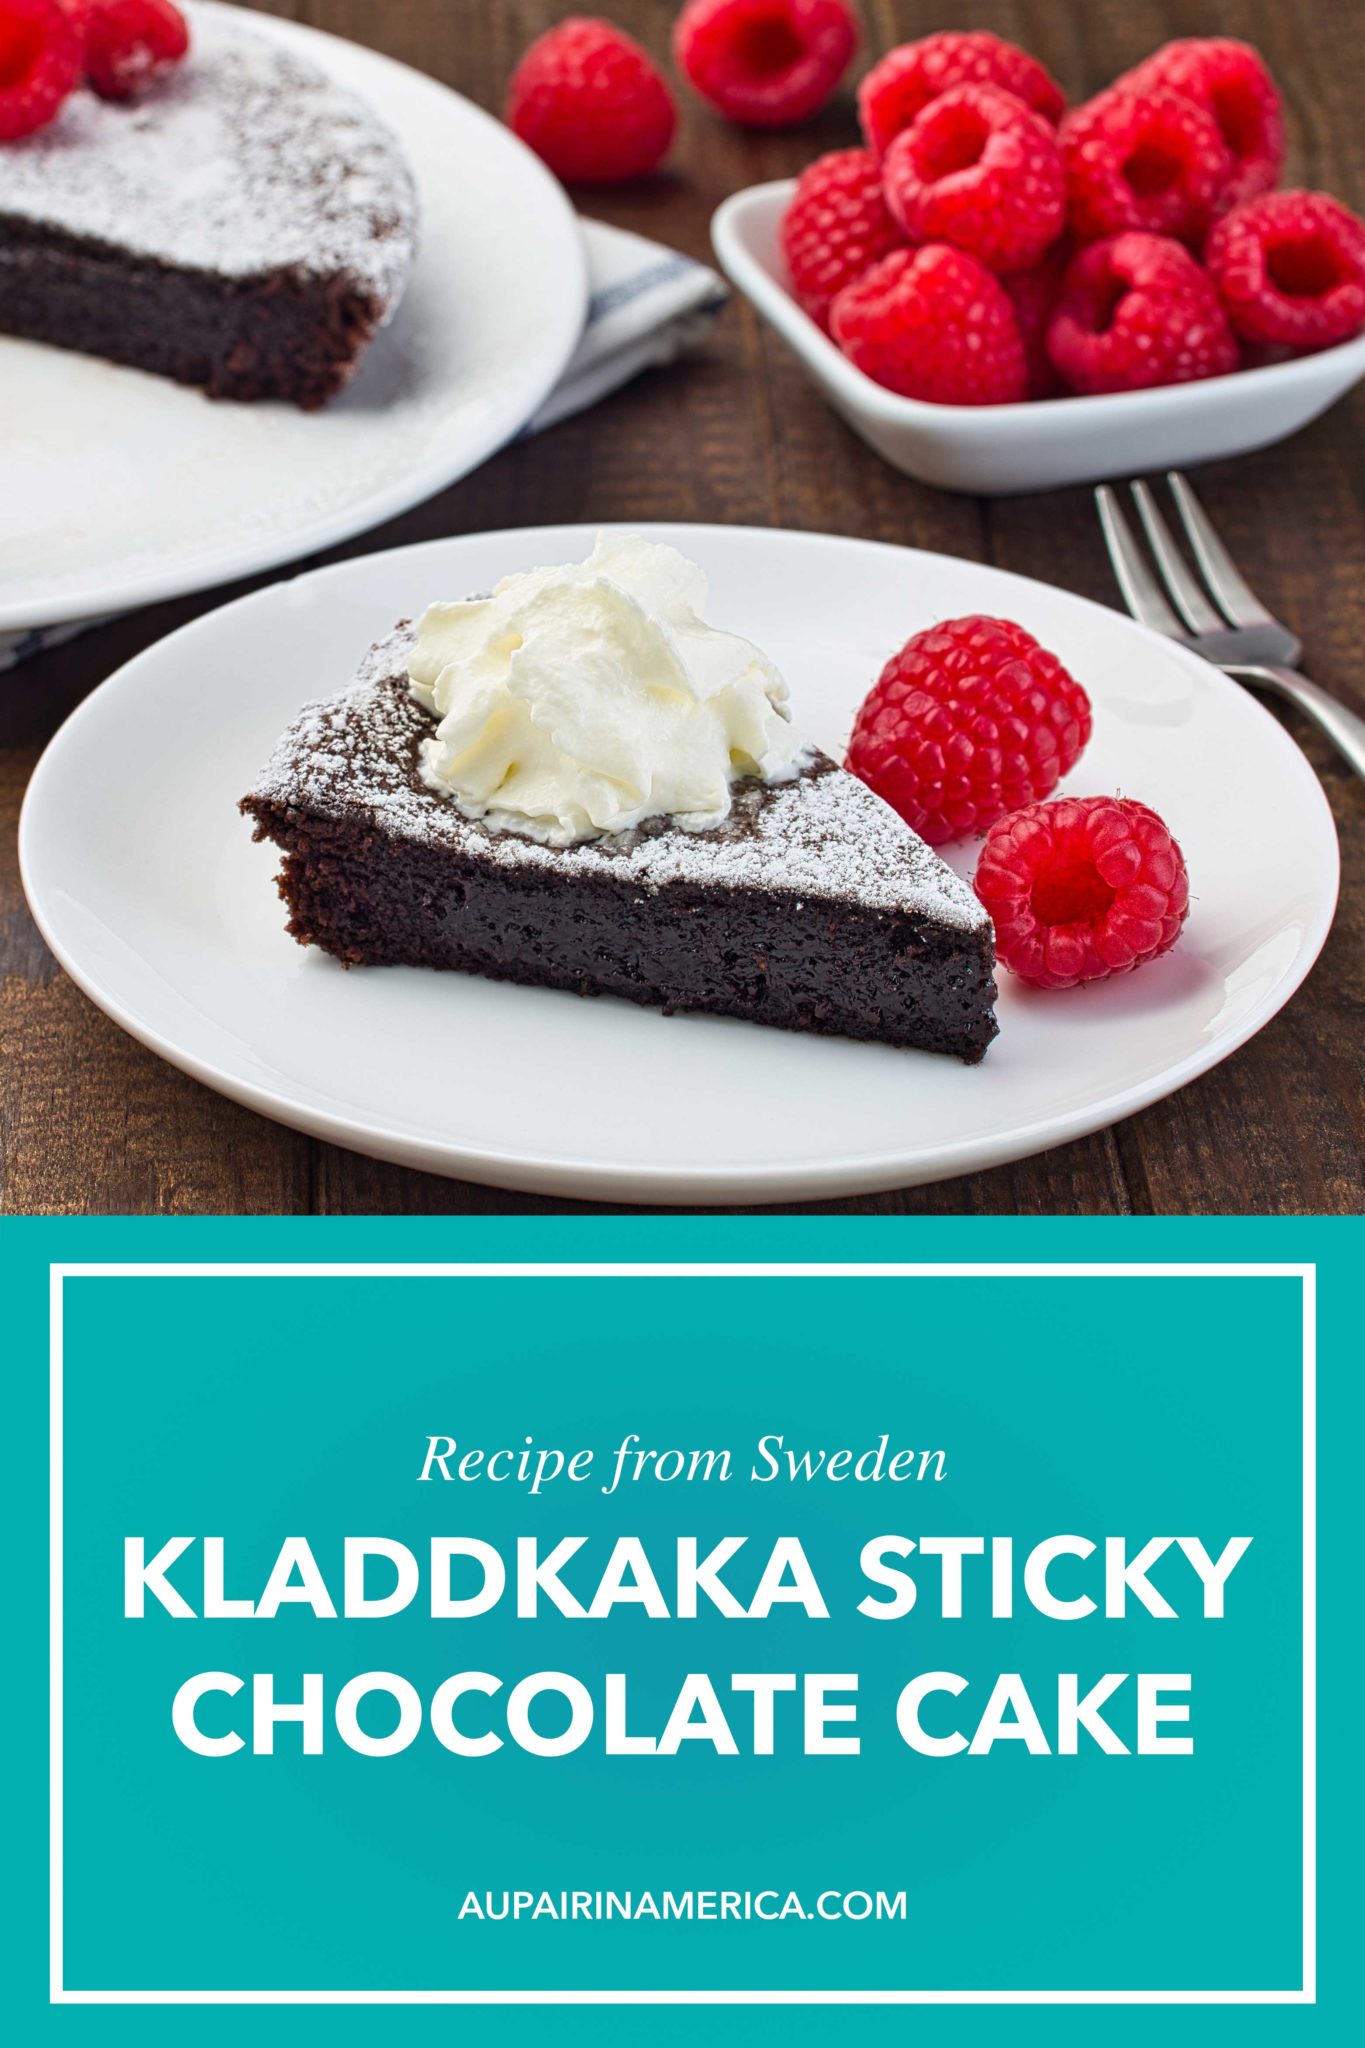 How to Make Swedish Kladdkaka, a Sticky Chocolate Cake